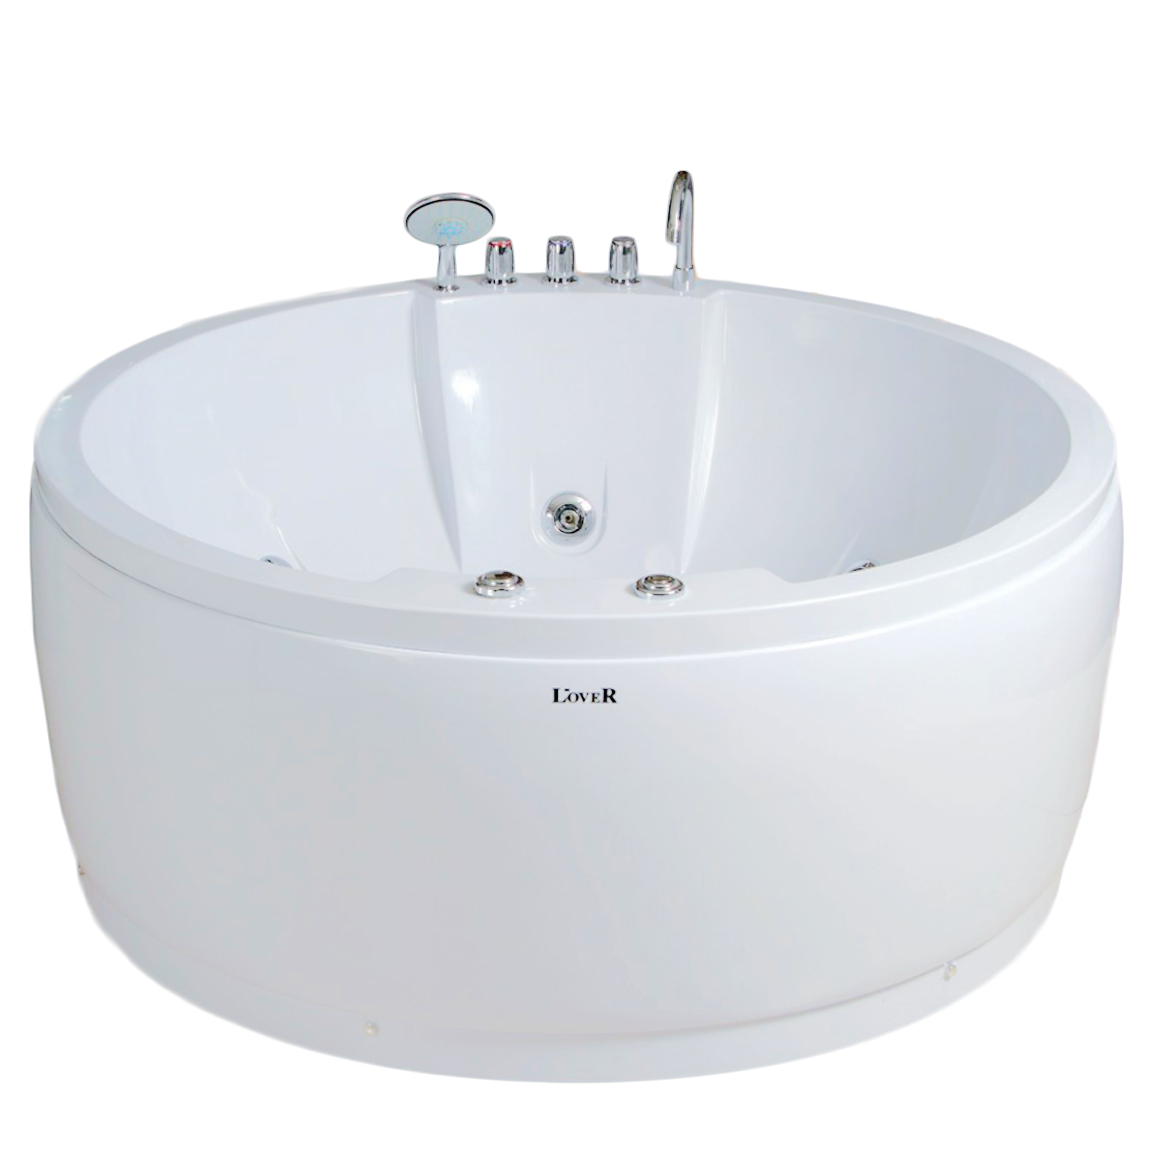 Round ABS Material Whirlpool Massage Bathtub